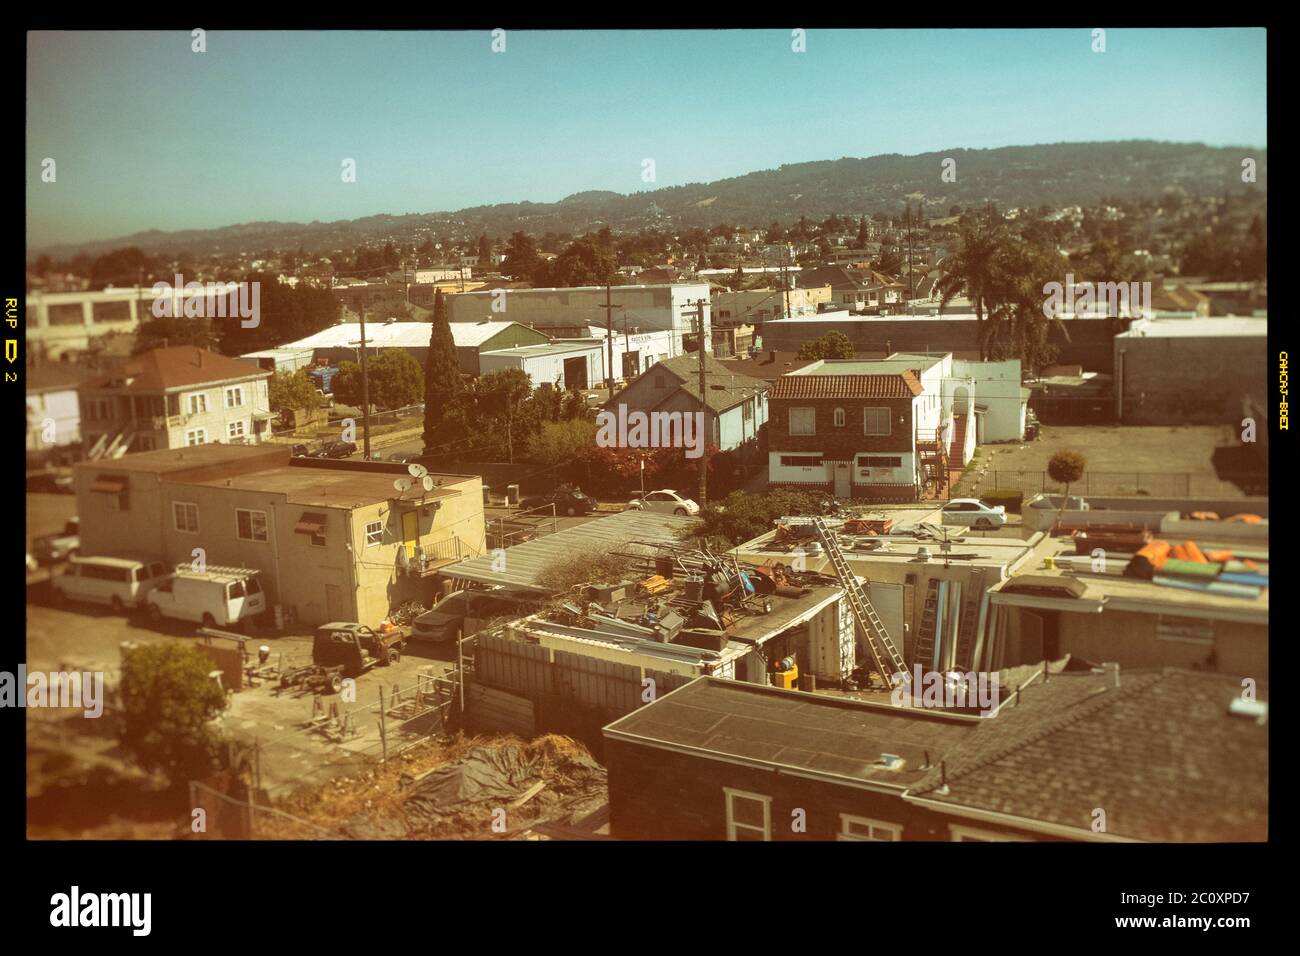 View of ghetto neighborhood in Oakland,Califonia Stock Photo